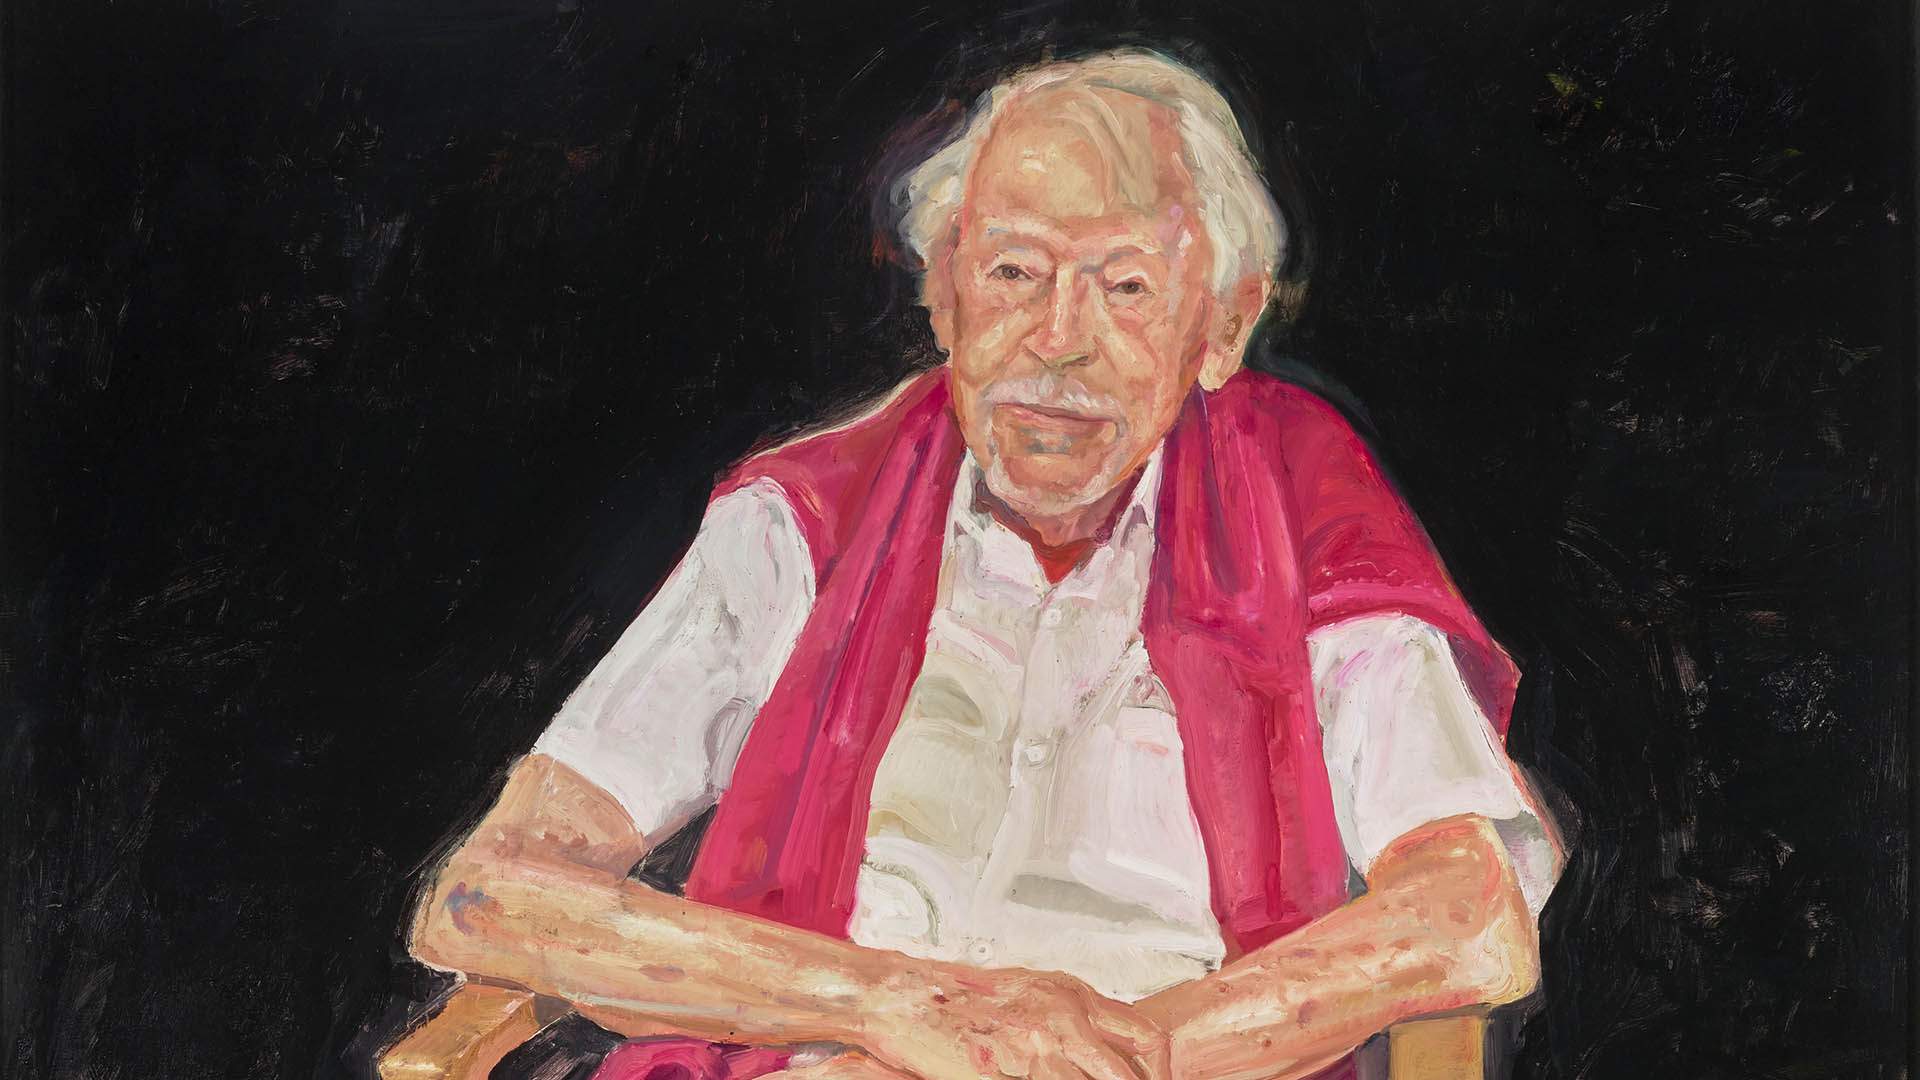 Peter Wegner's Portrait of Fellow Artist Guy Warren Has Just Taken Out the 2021 Archibald Prize